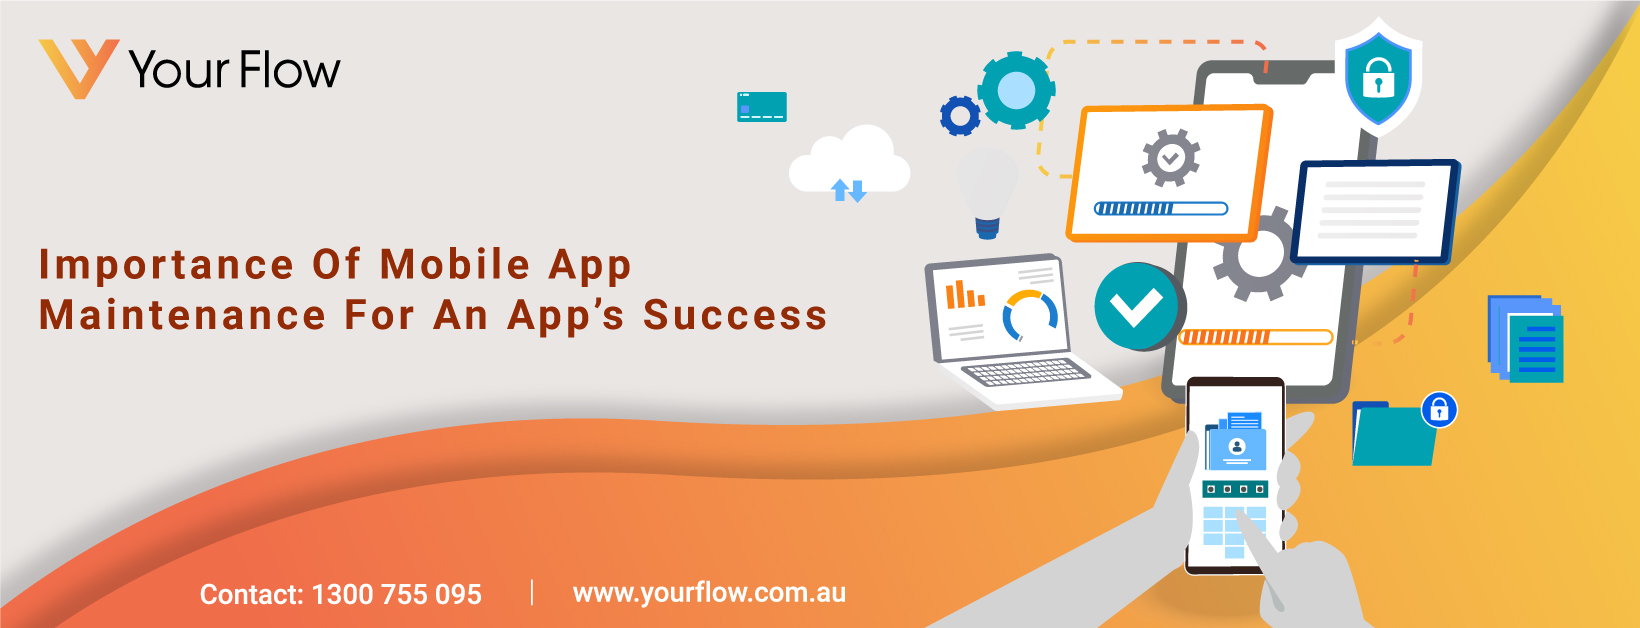 Importance Of Mobile App Maintenance For An App Success 